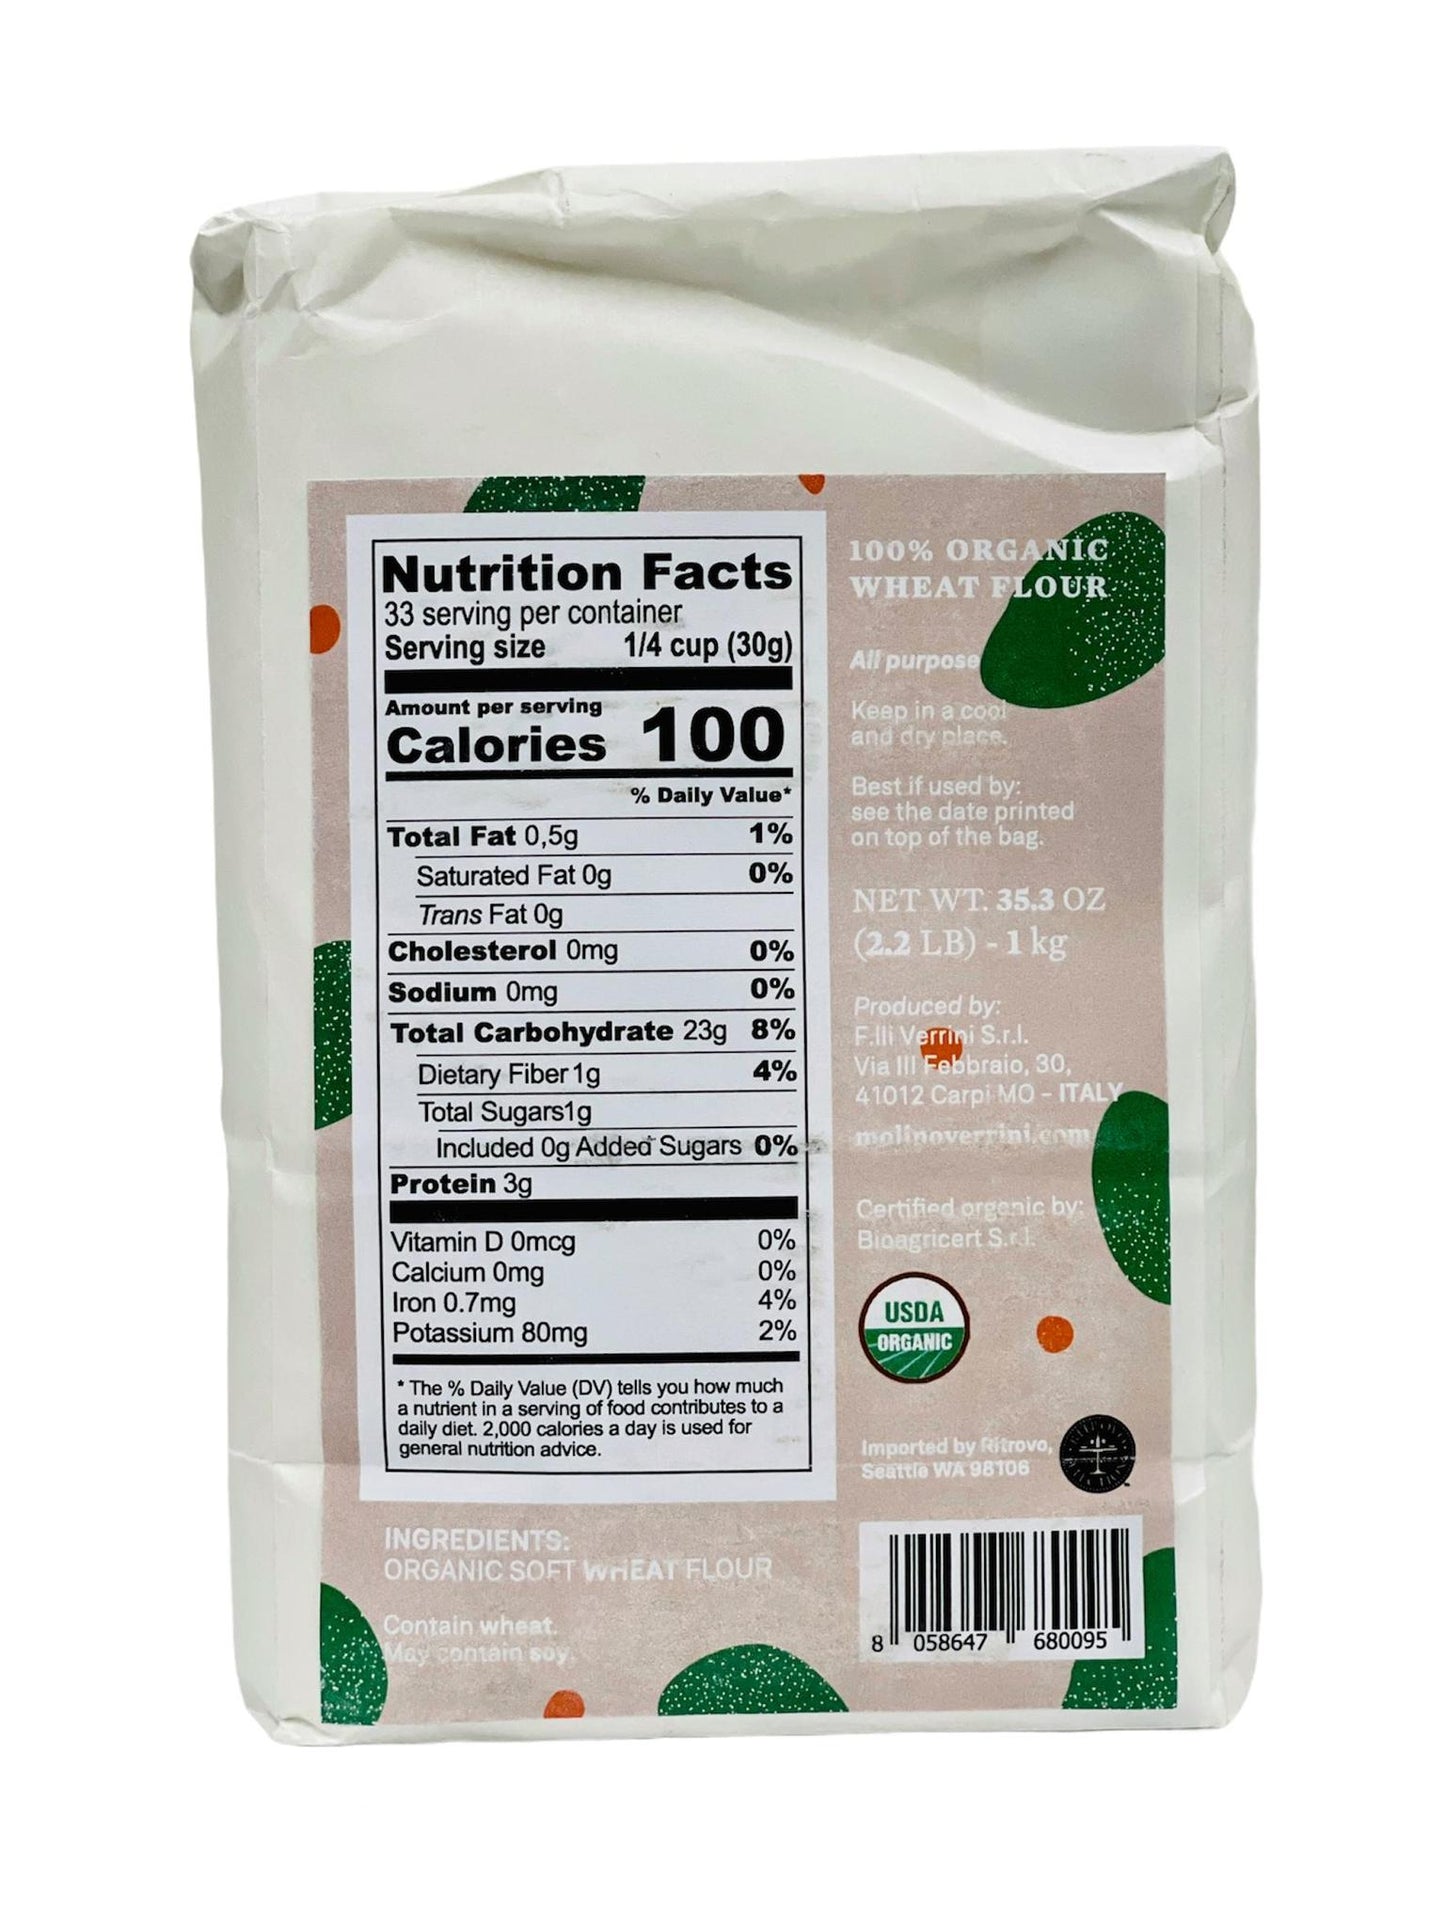 Mulino Verrini 100% Organic Wheat Flour, 35.3 oz